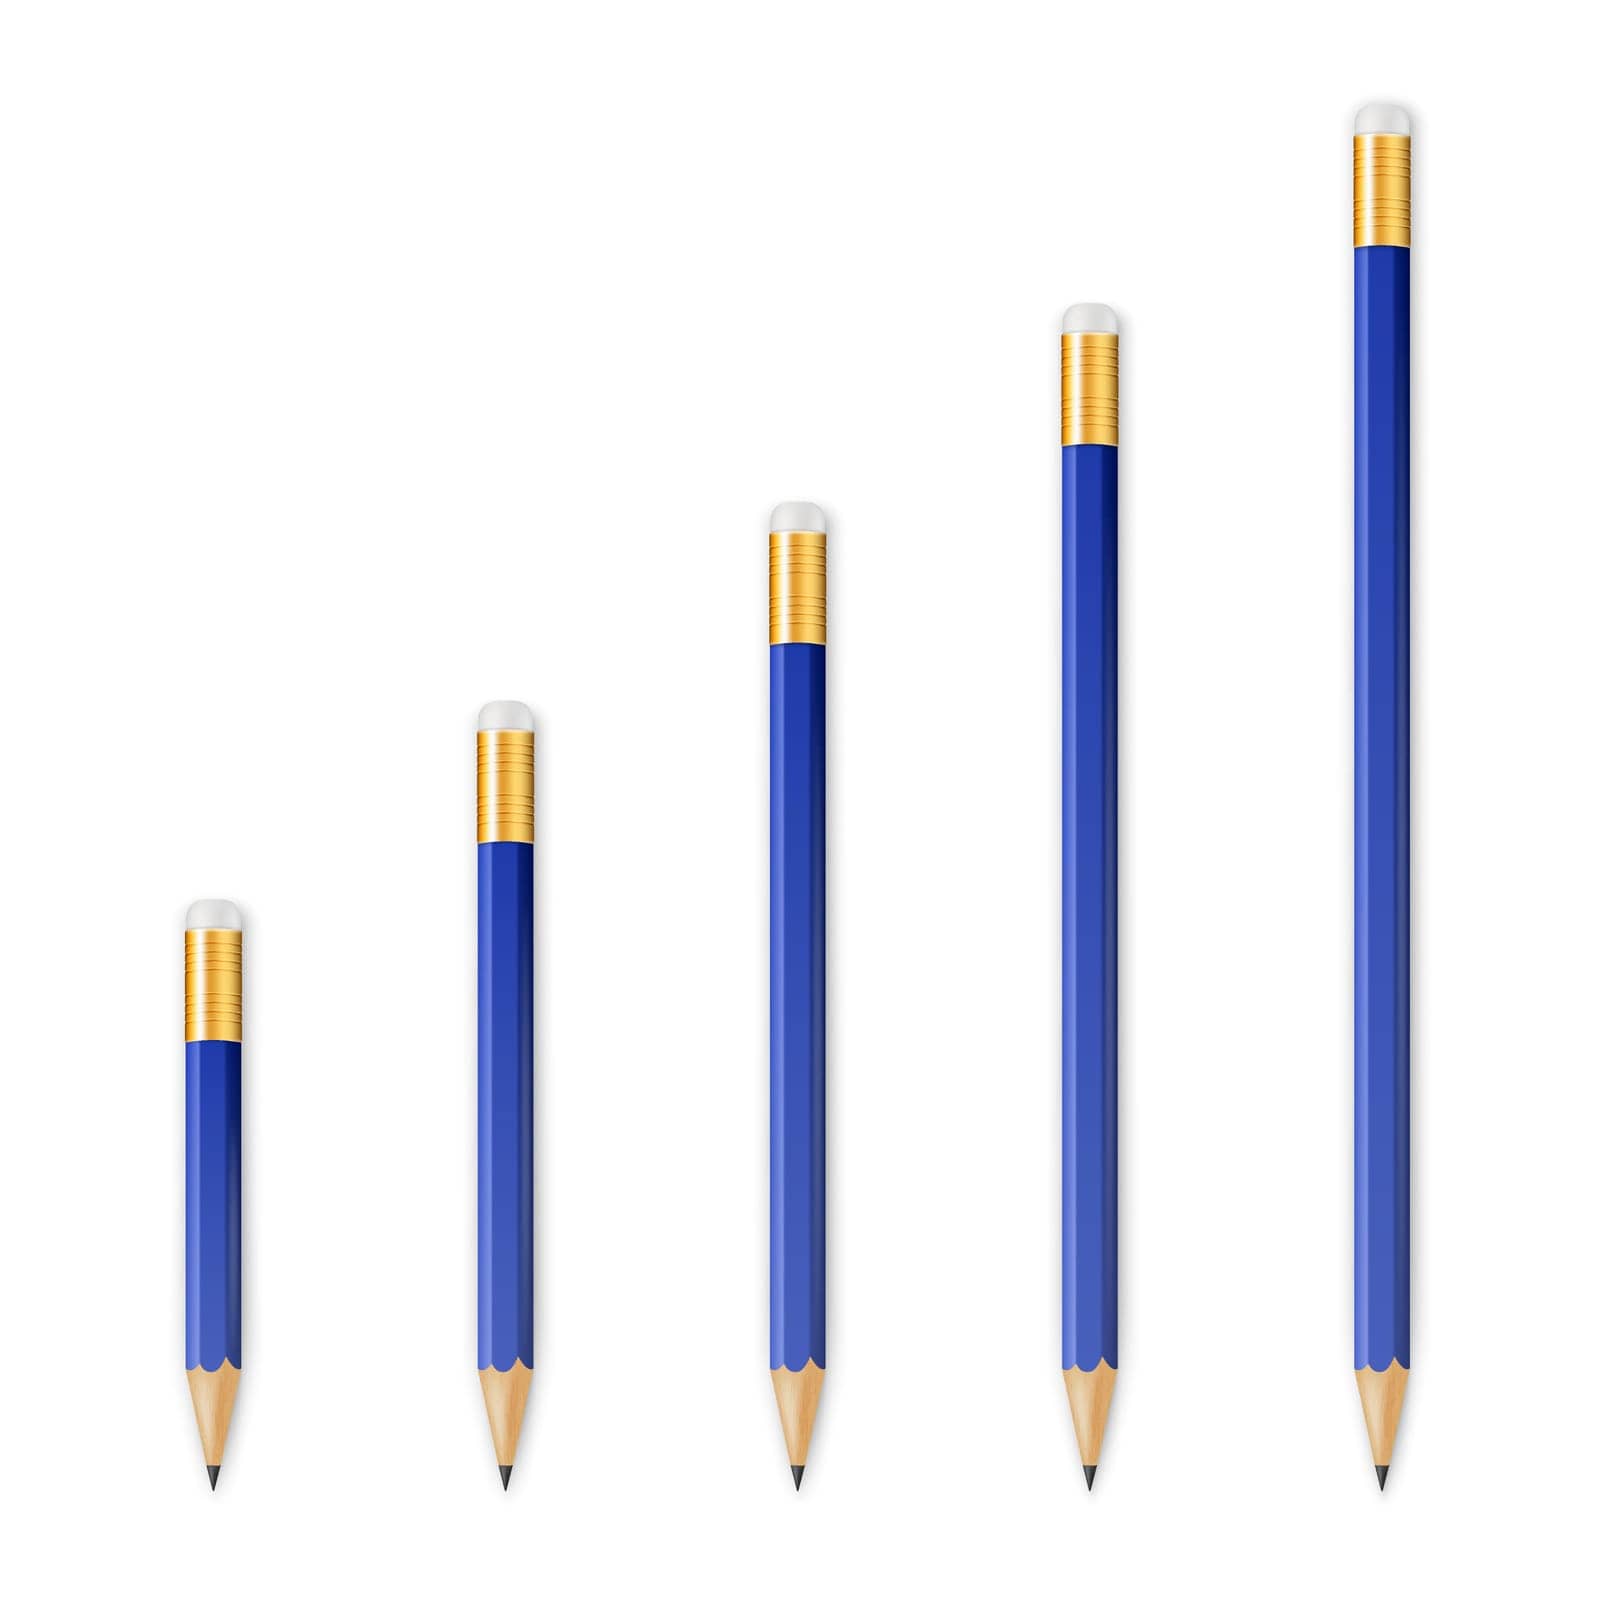 Blue wooden sharp pencils by Gomolach